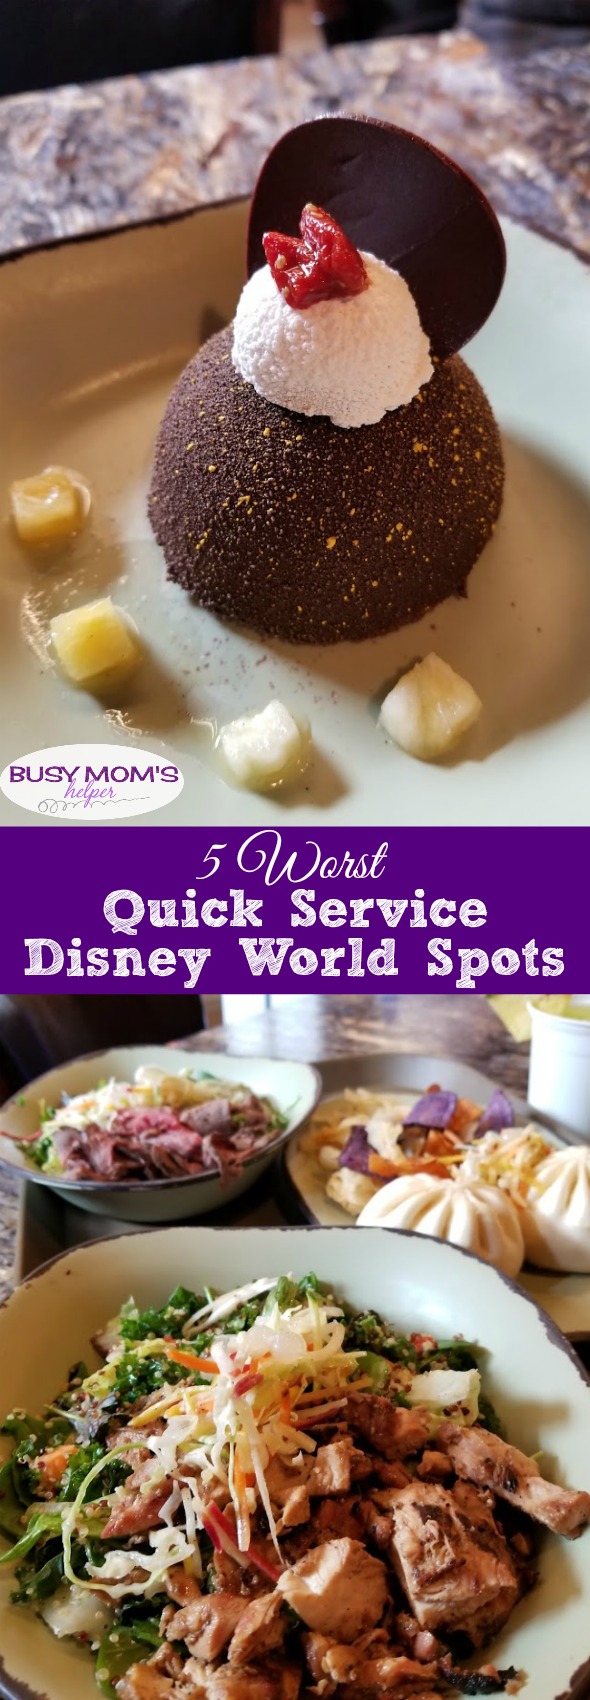 5 Worst Quick Service Disney World Restaurants #waltdisneyworld #disneyfood #wdw #disneyparks #disney